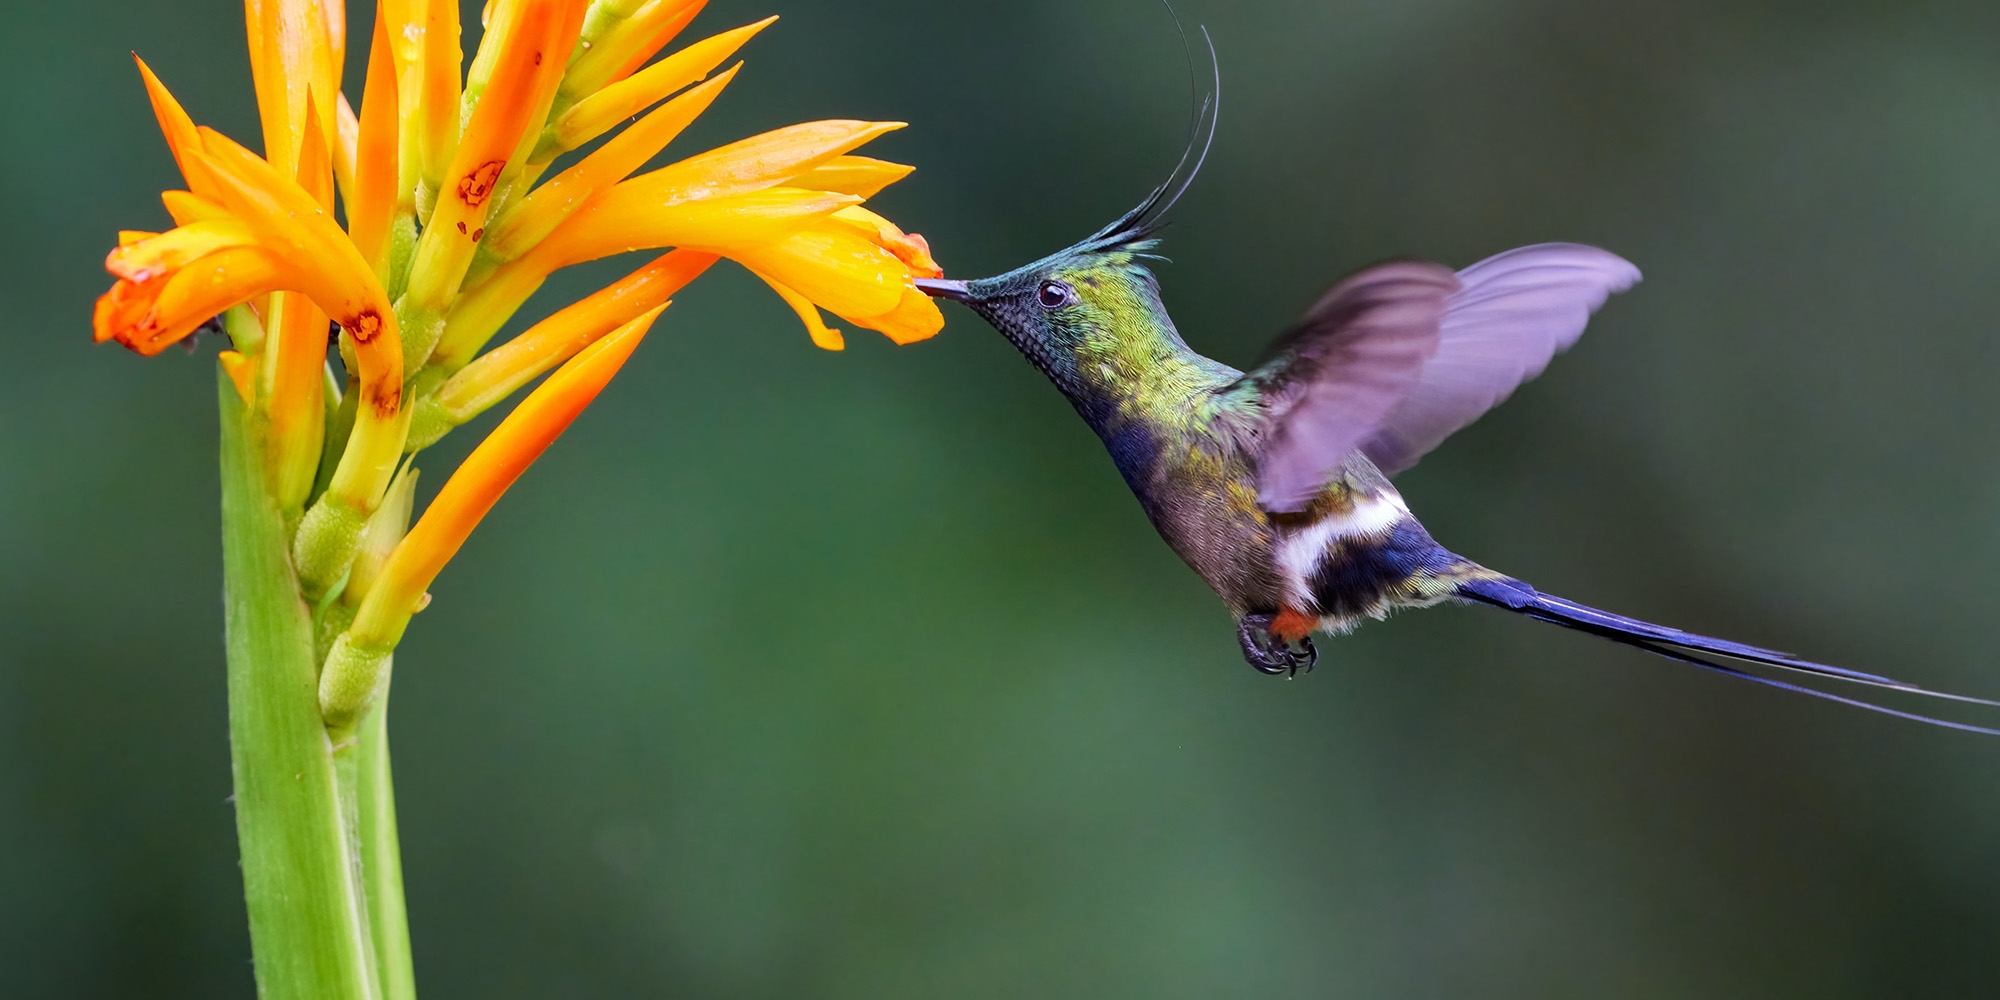 A hummingbird pollinating a flower